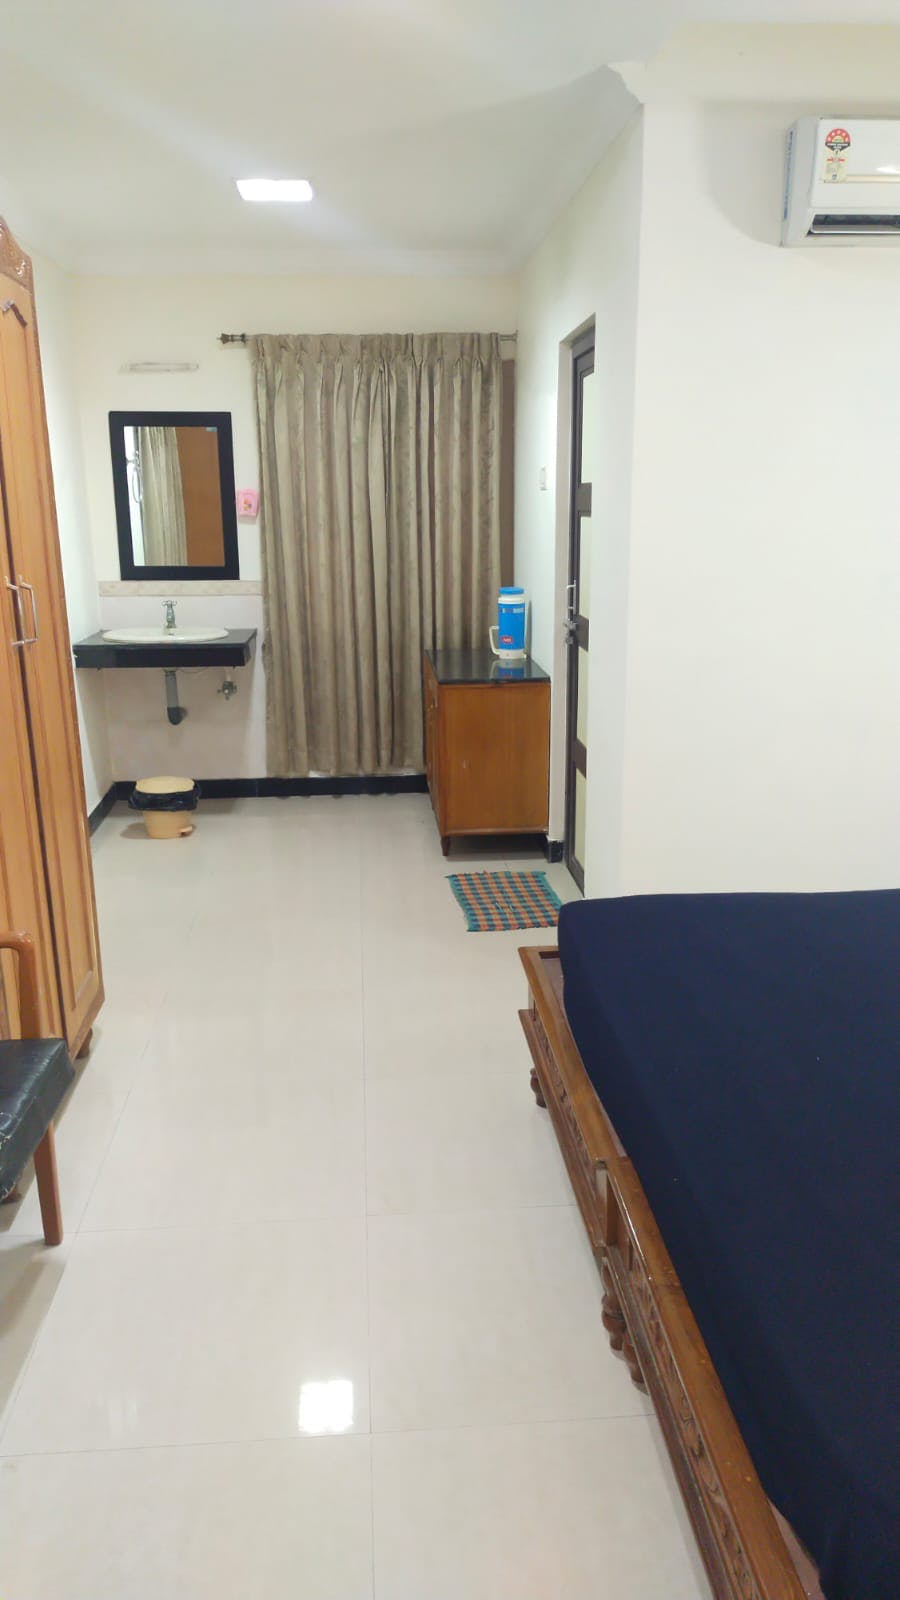 Hotel Room Image